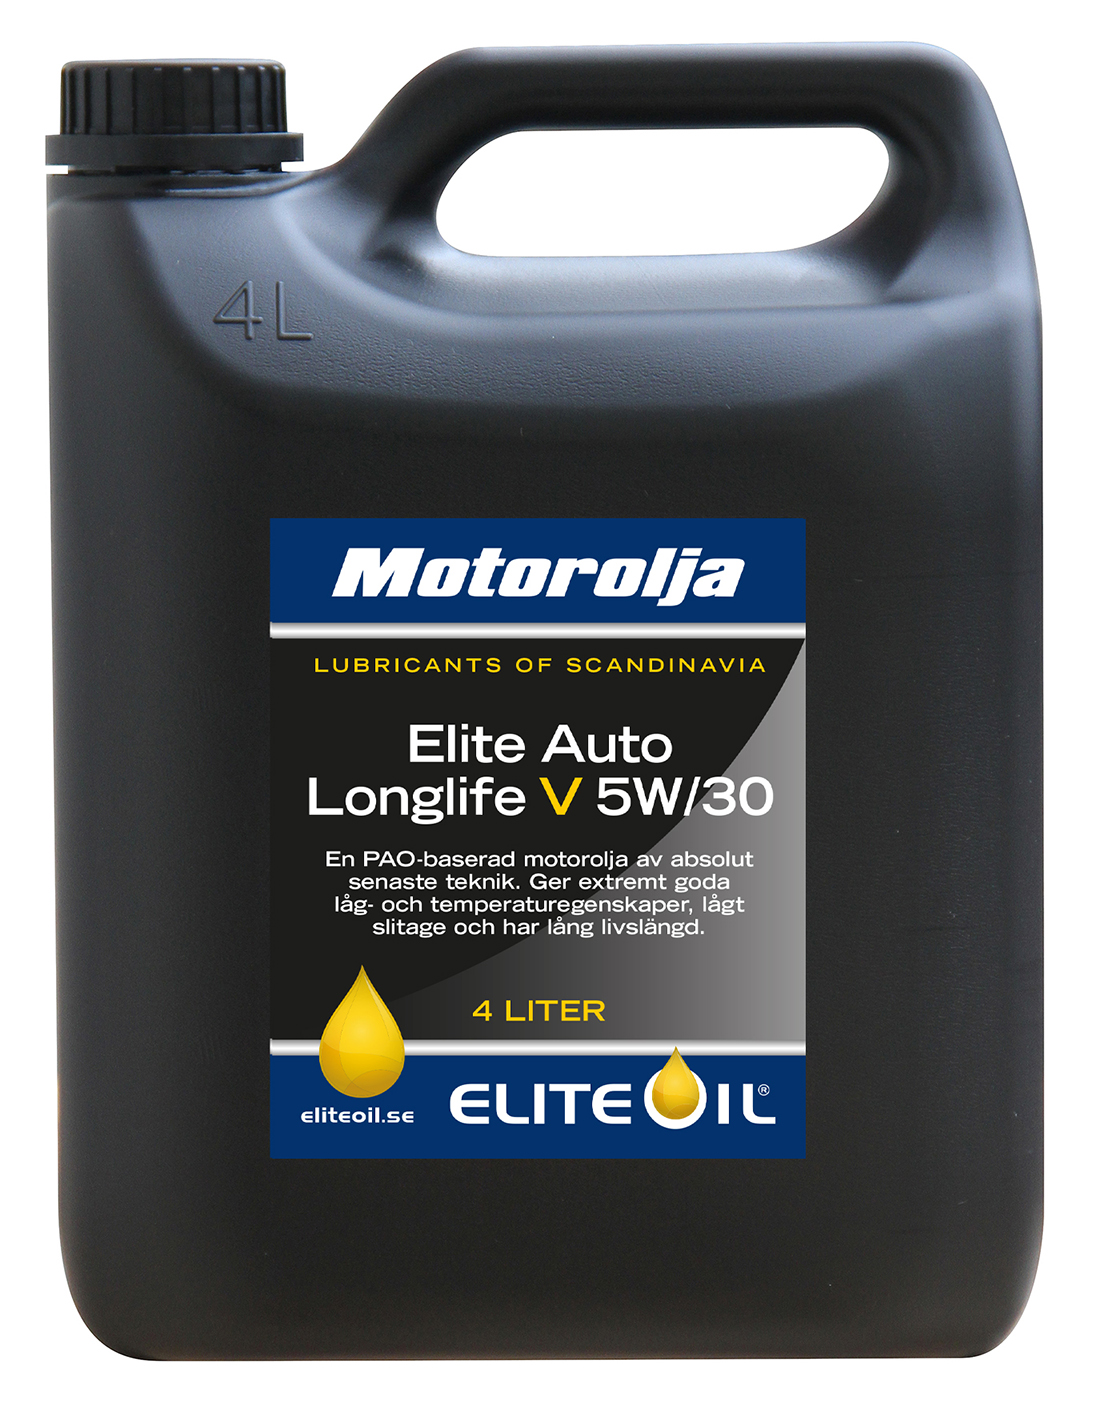 Elite Auto Longlife V, 5W/30, 4 liter dunk (3-pack) - 3 pack